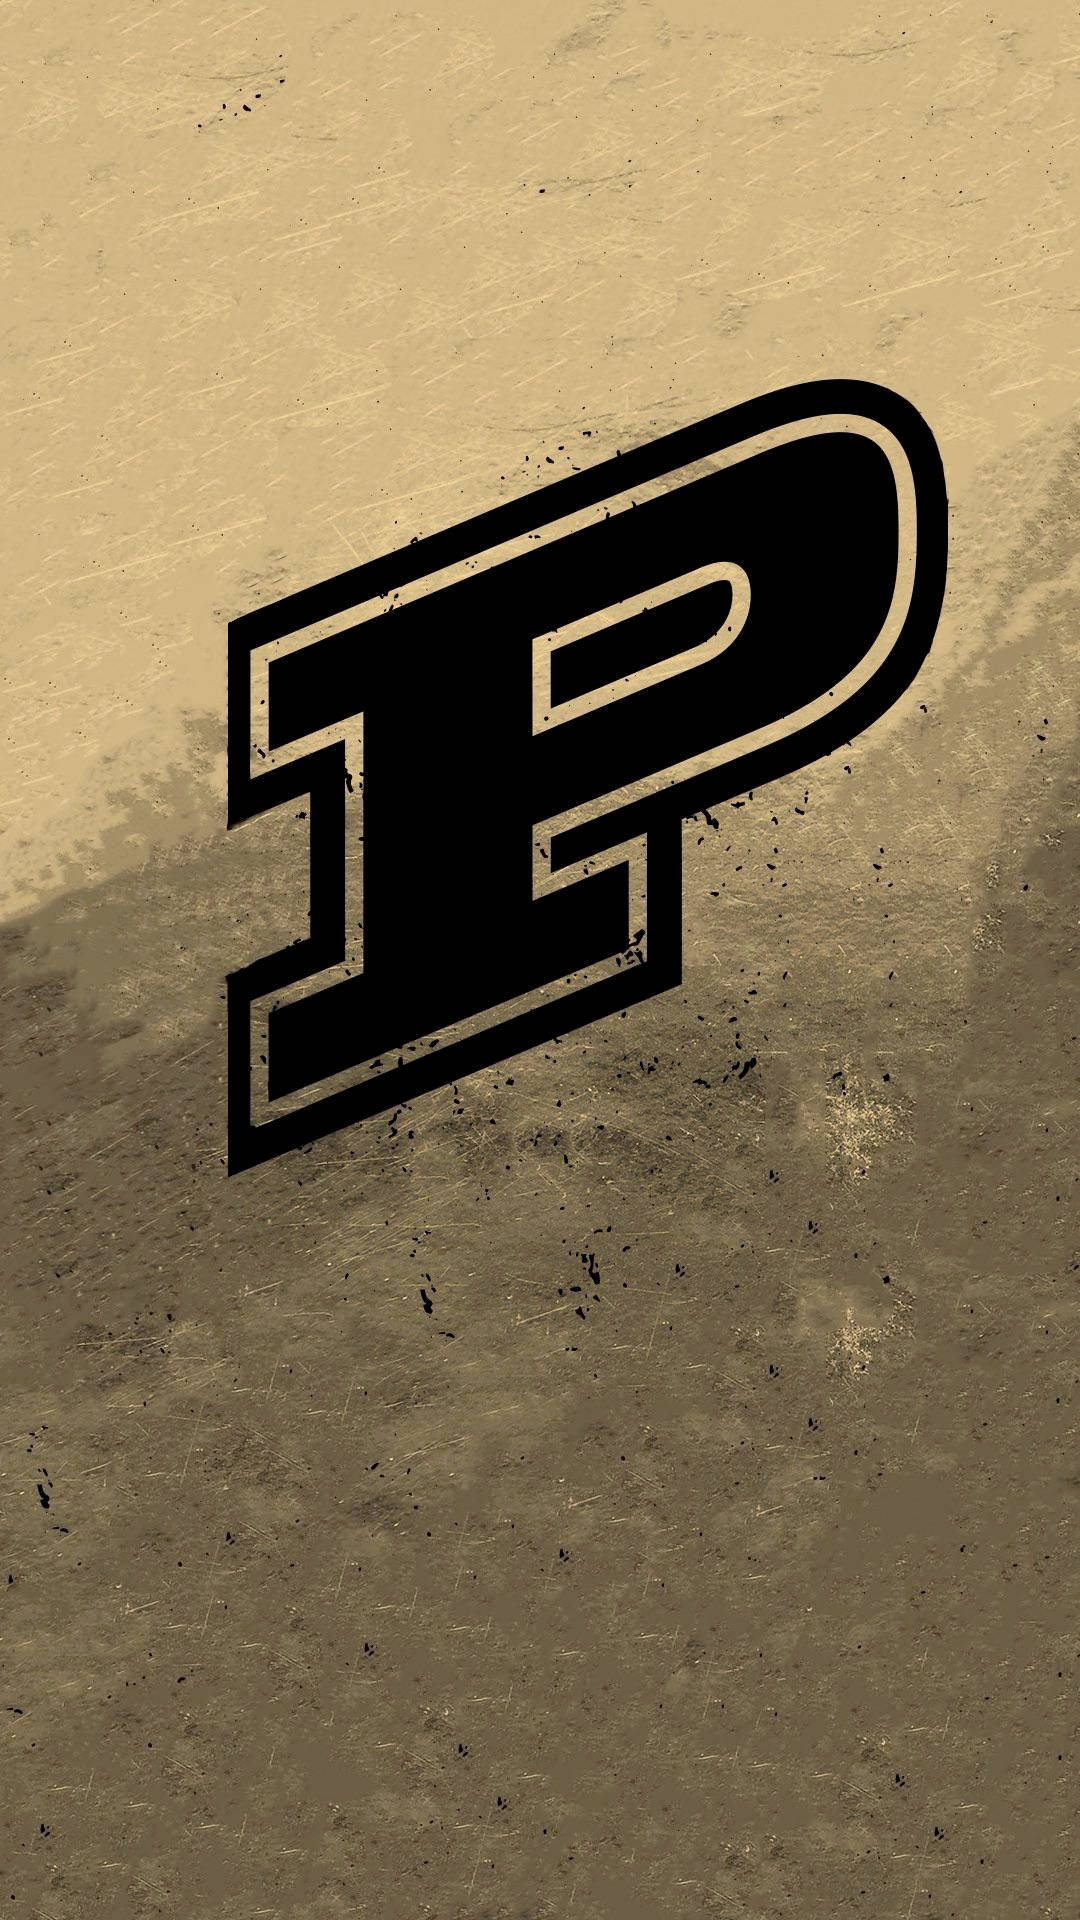 Purdueuniversity Logo In Schmutzigem Braunen Farbverlauf Wallpaper